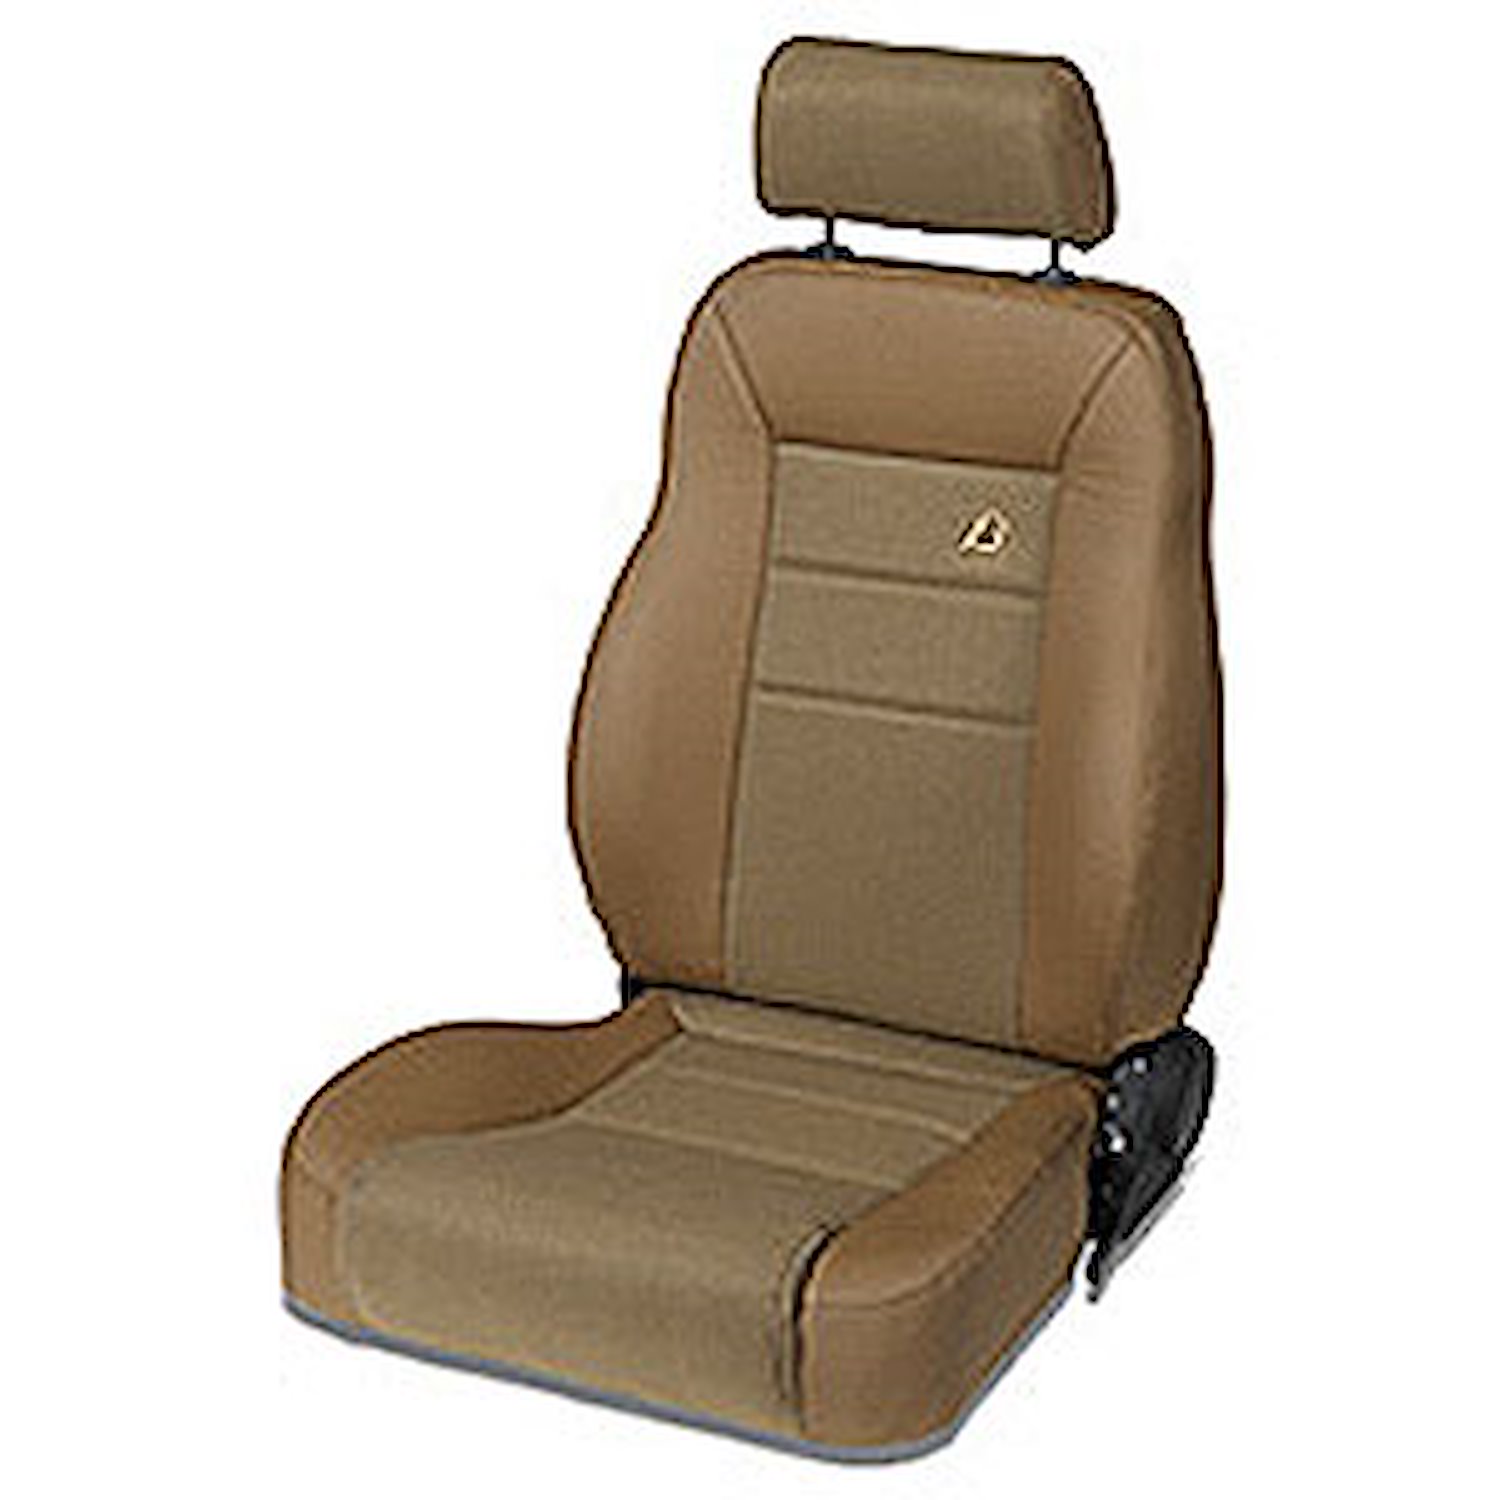 Trailmax II Pro Seat, Spice, Front, High-Back, Vinyl, w/Center Fabric Insert, Premium Bucket, Driver Side,